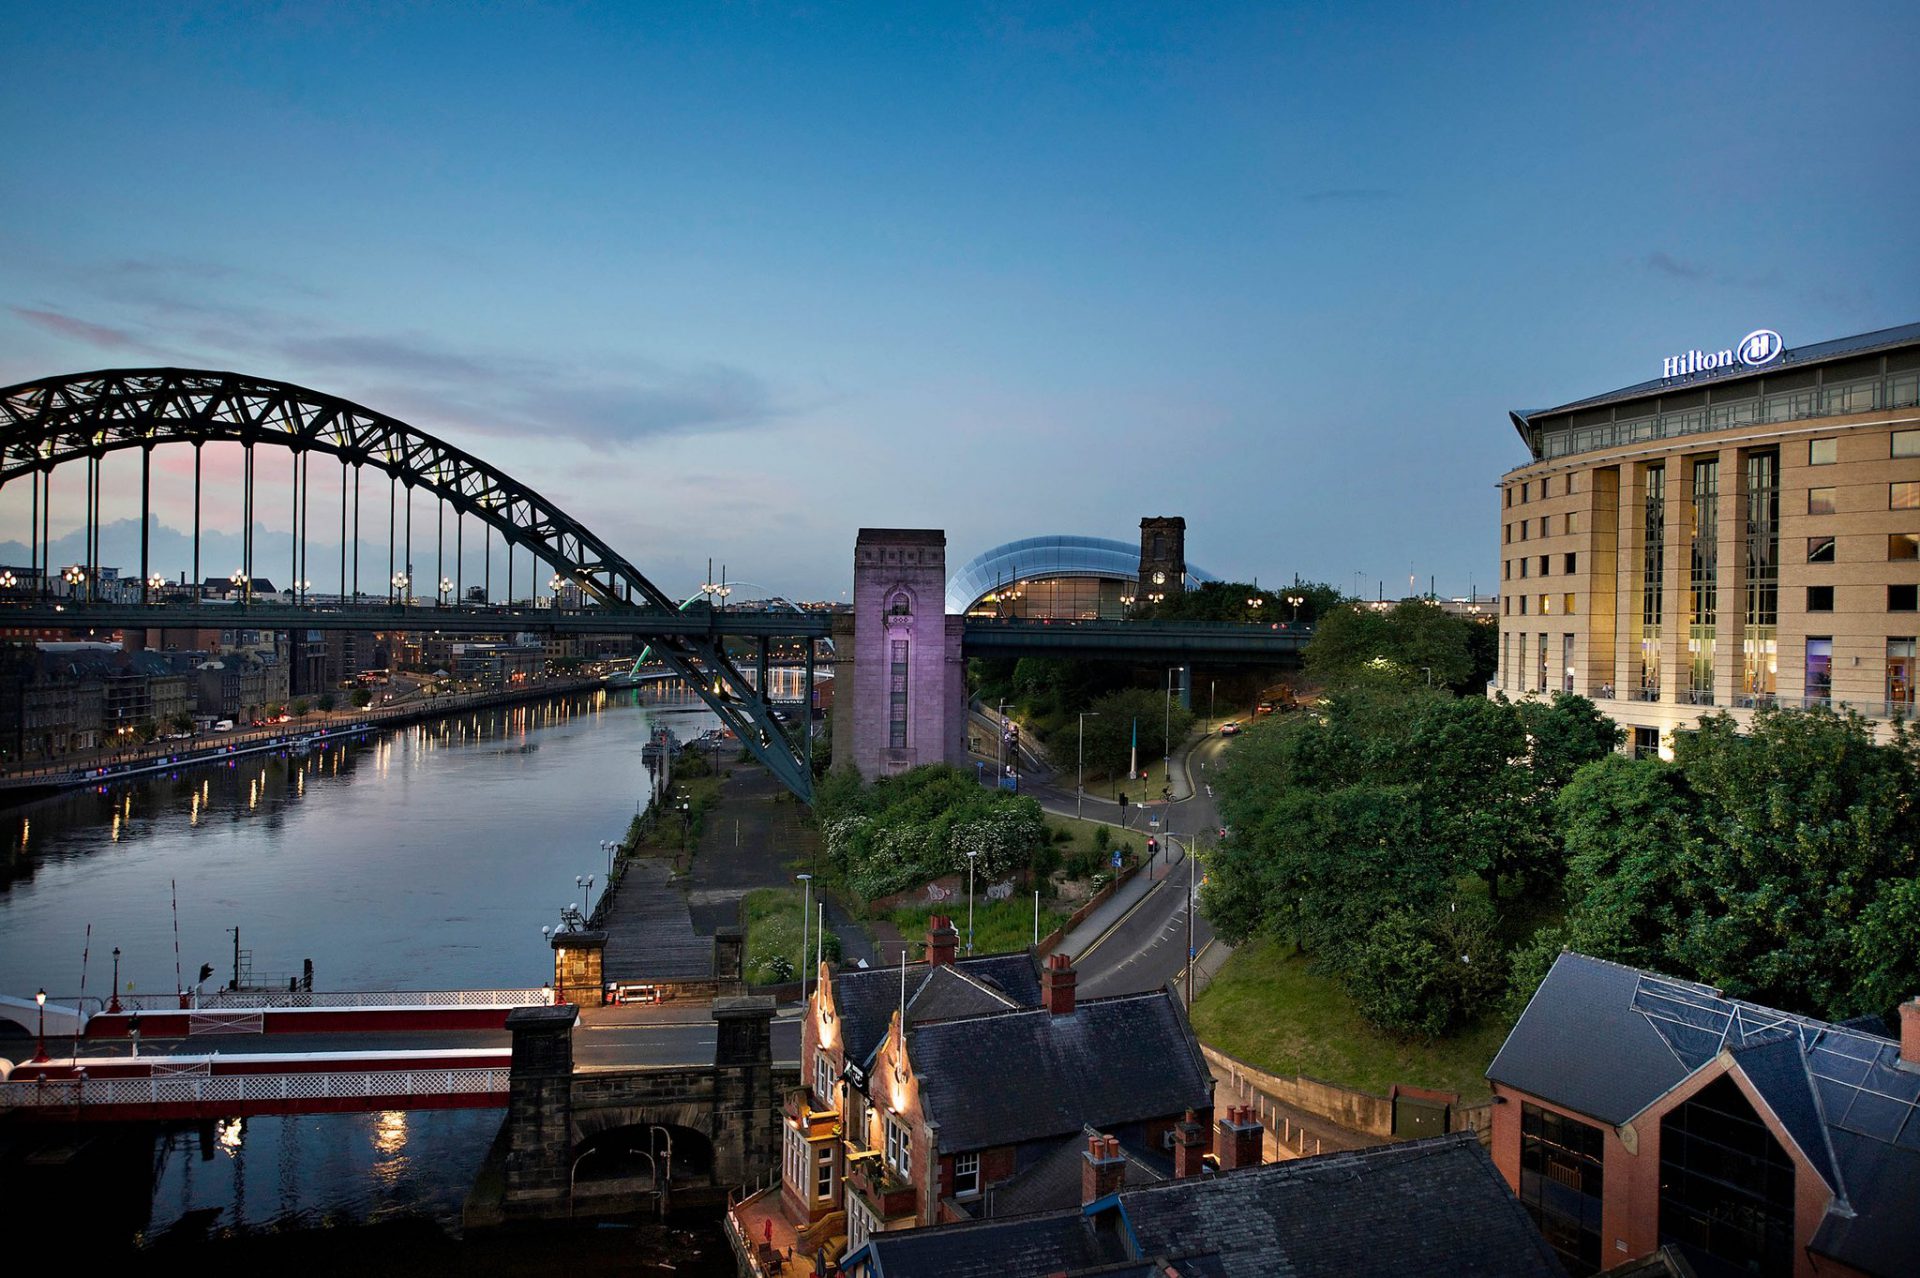 Hilton Newcastle Gateshead - YoNinja - Restaurants, Hotels, and Reviews